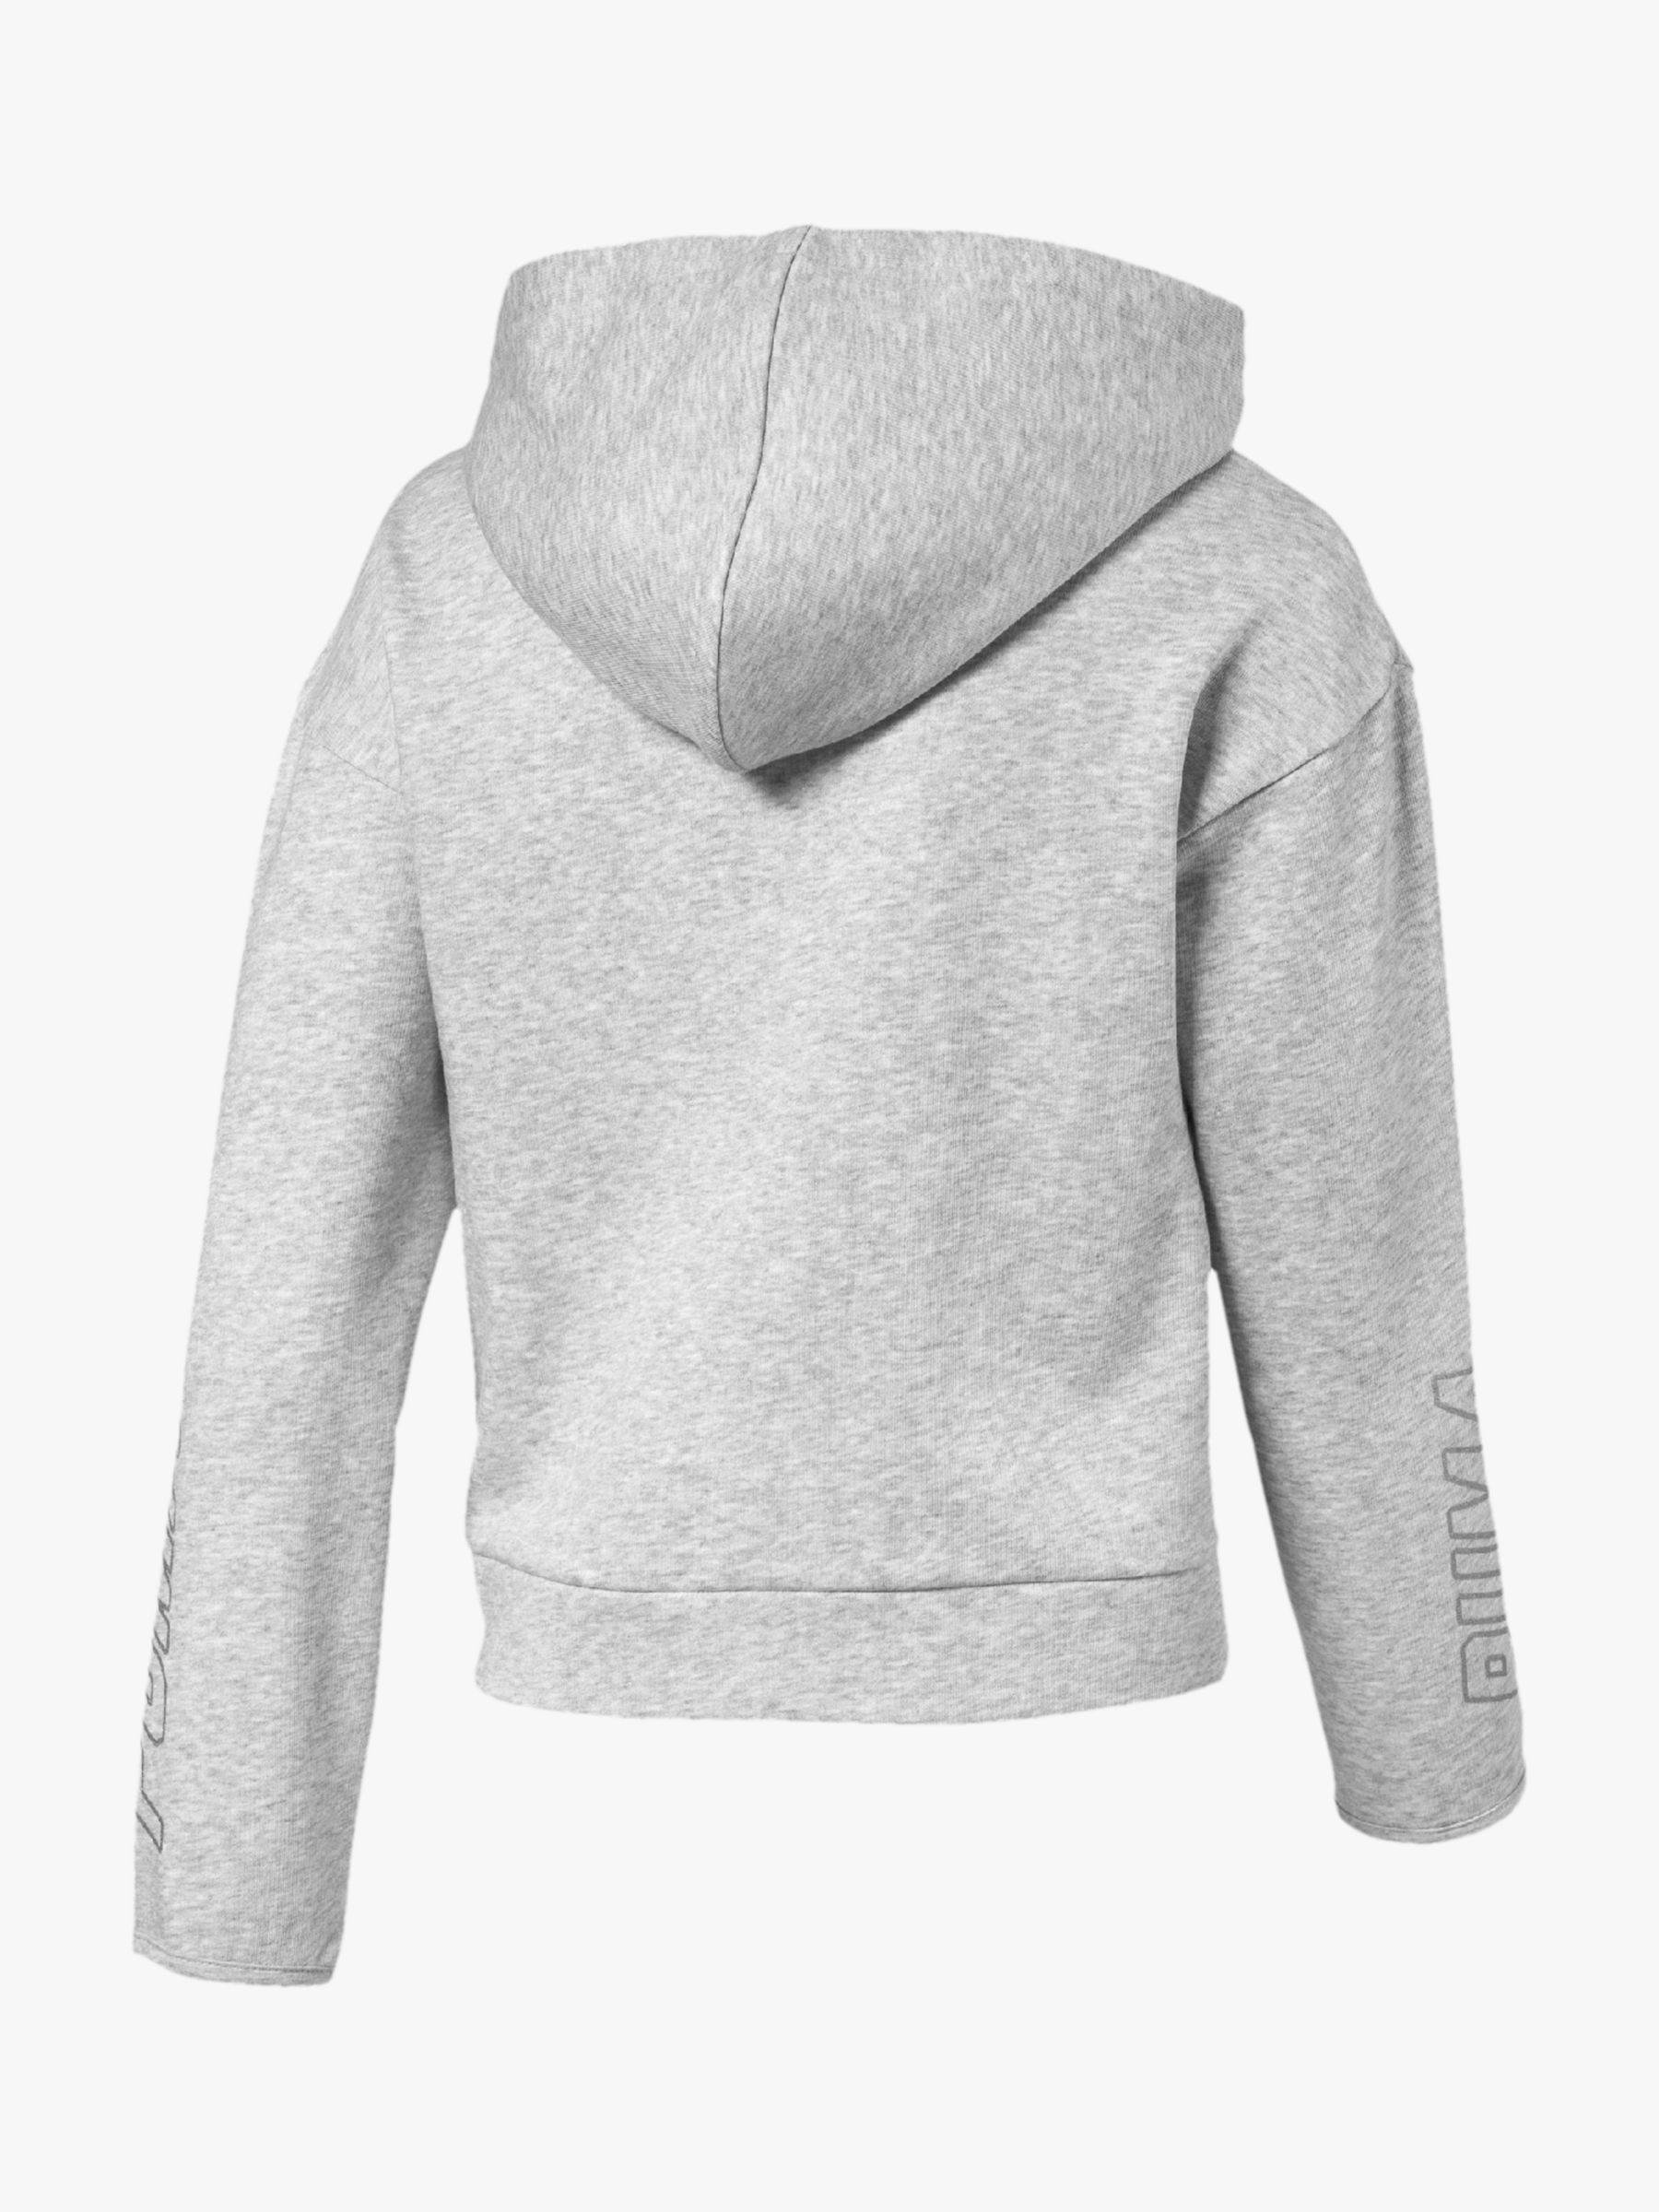 girls grey puma hoodie